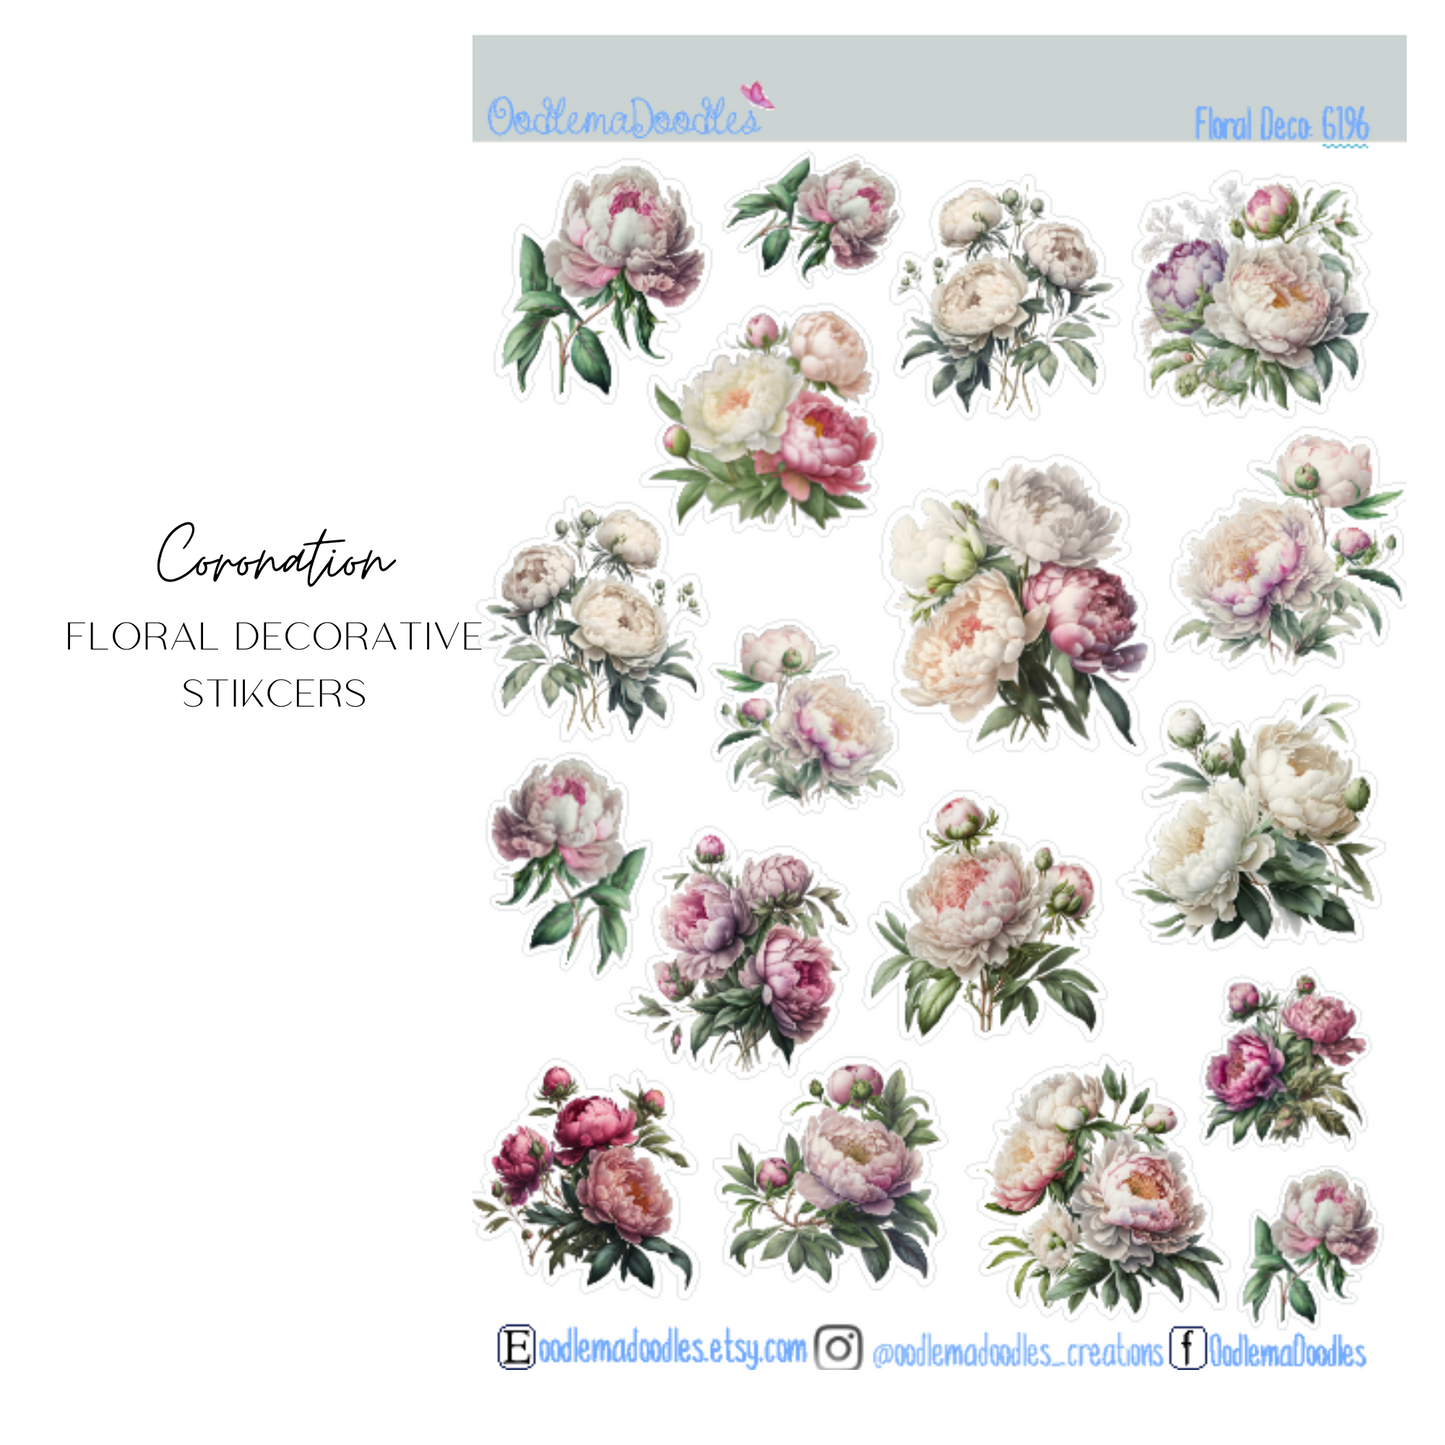 Coronation Floral Decorative Stickers